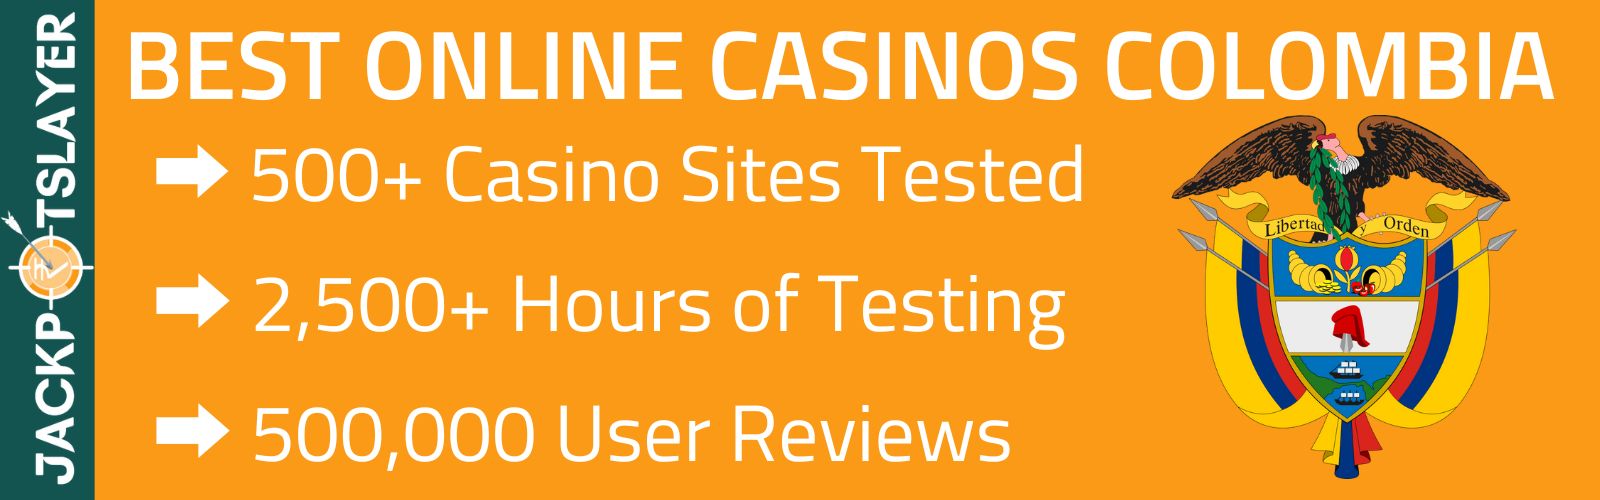 Best Online Casinos Colombia